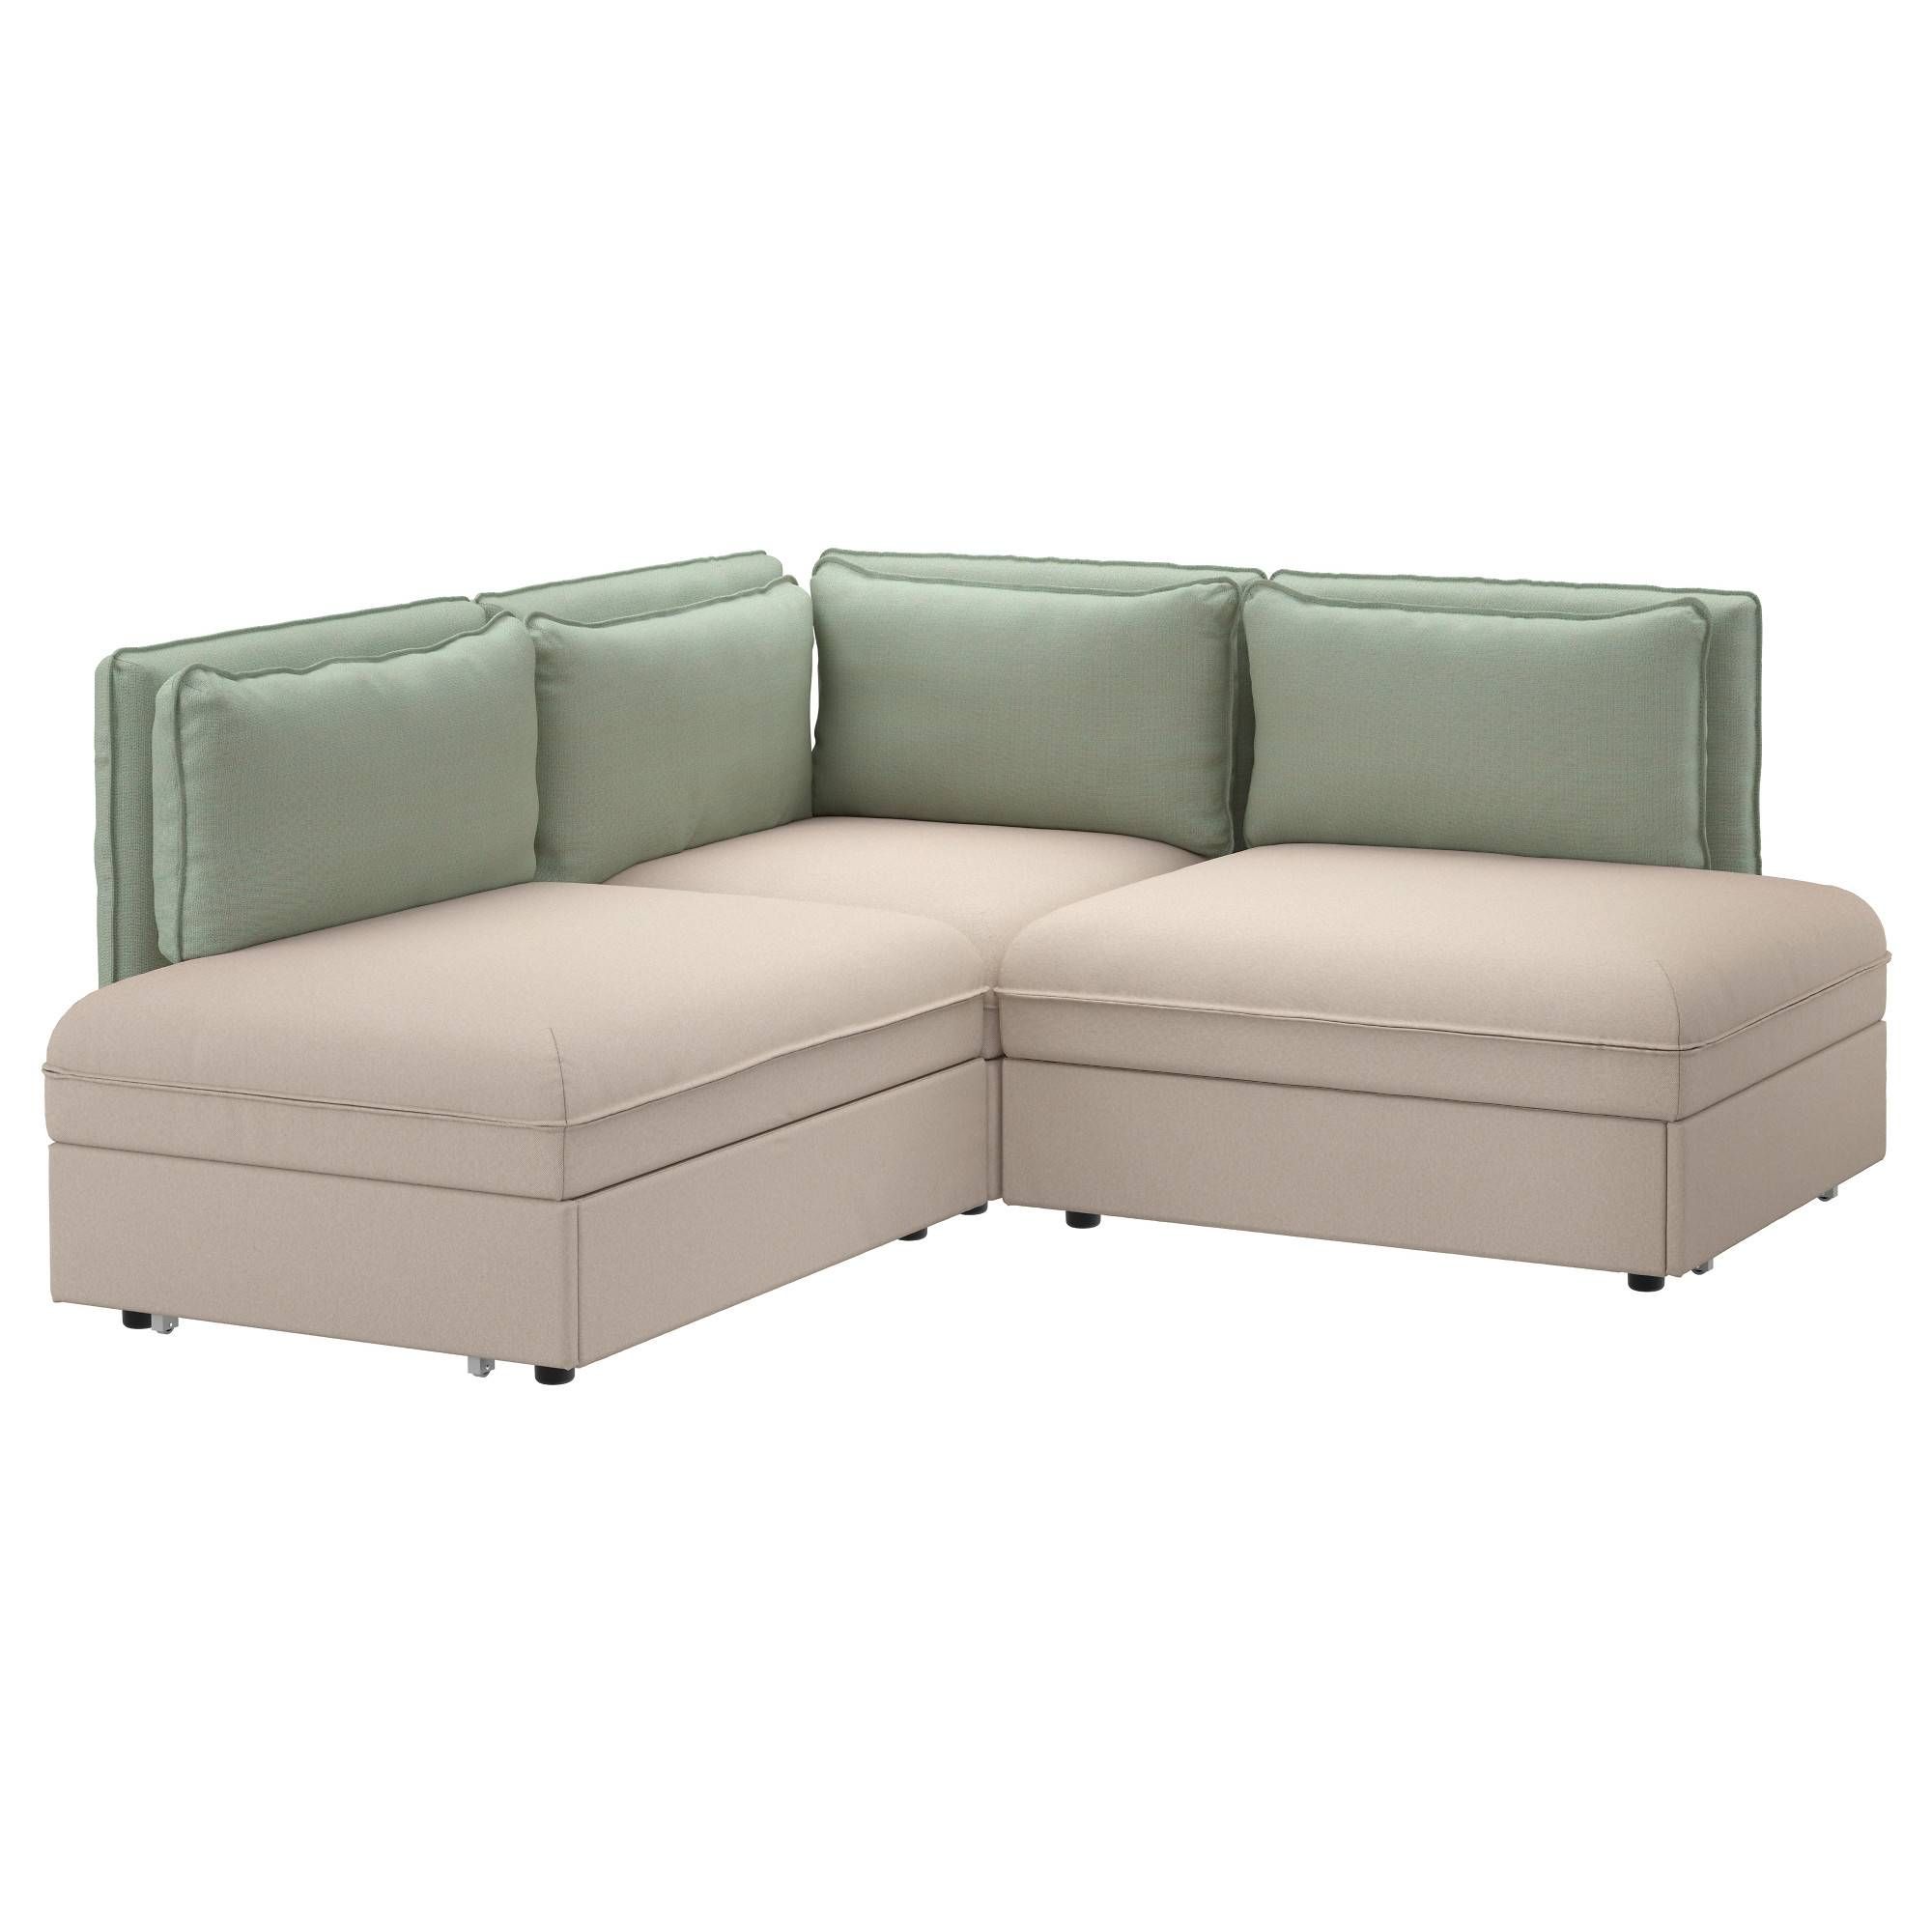 Single Sofa Beds Ikea Home Design